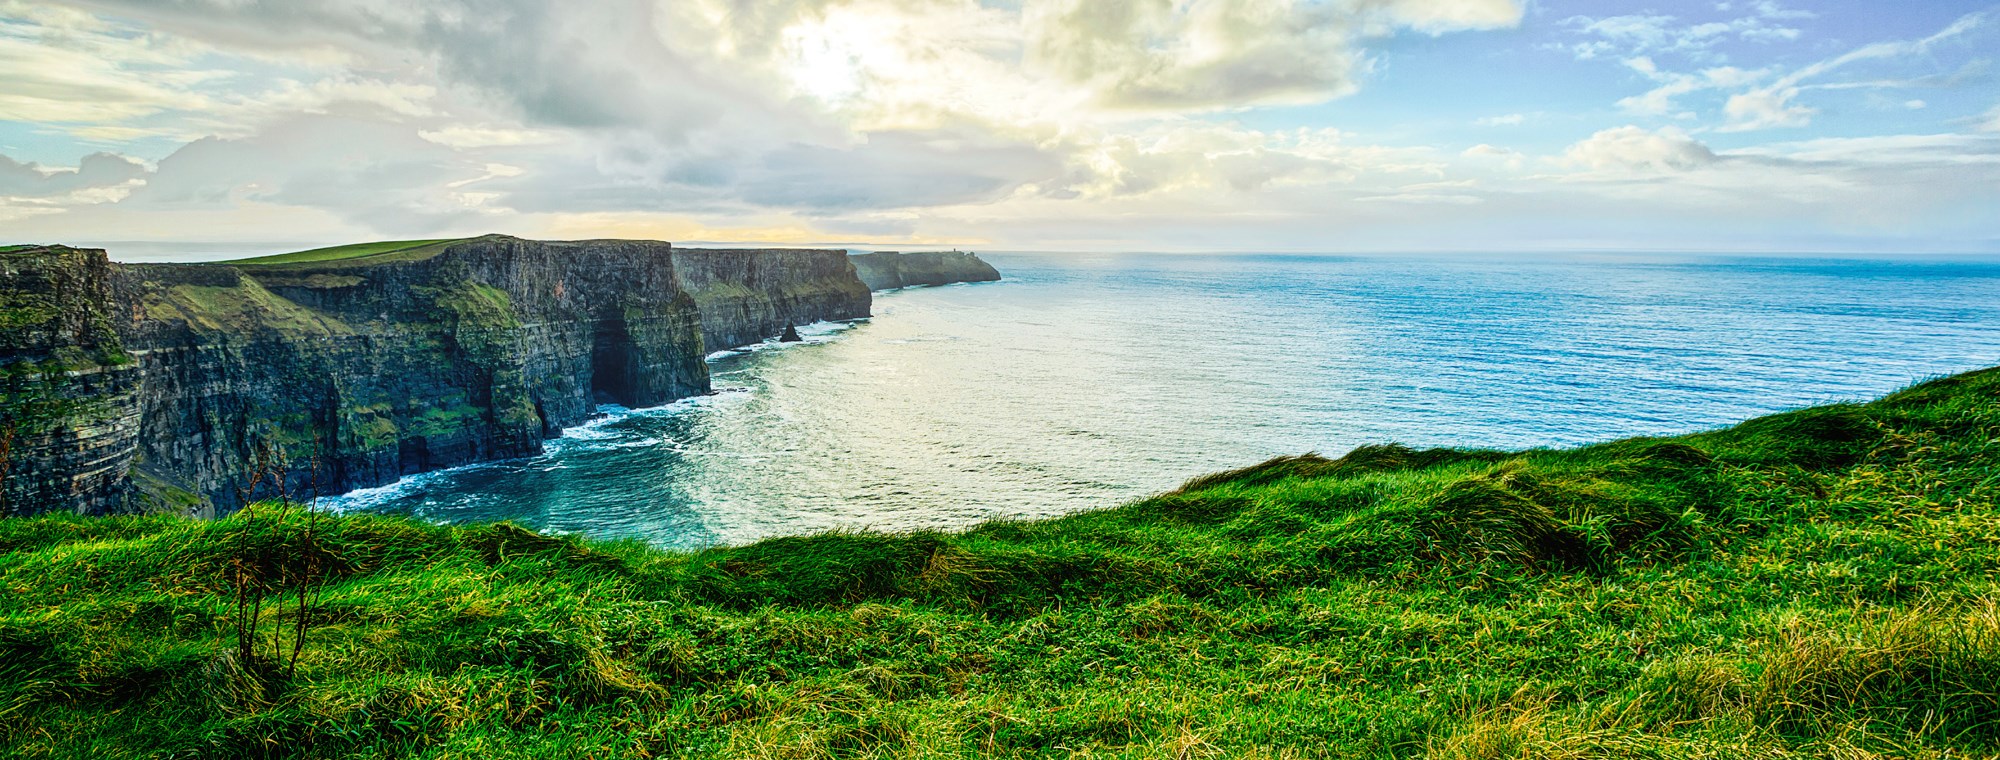 Ireland Tours Cliffs Of Moher